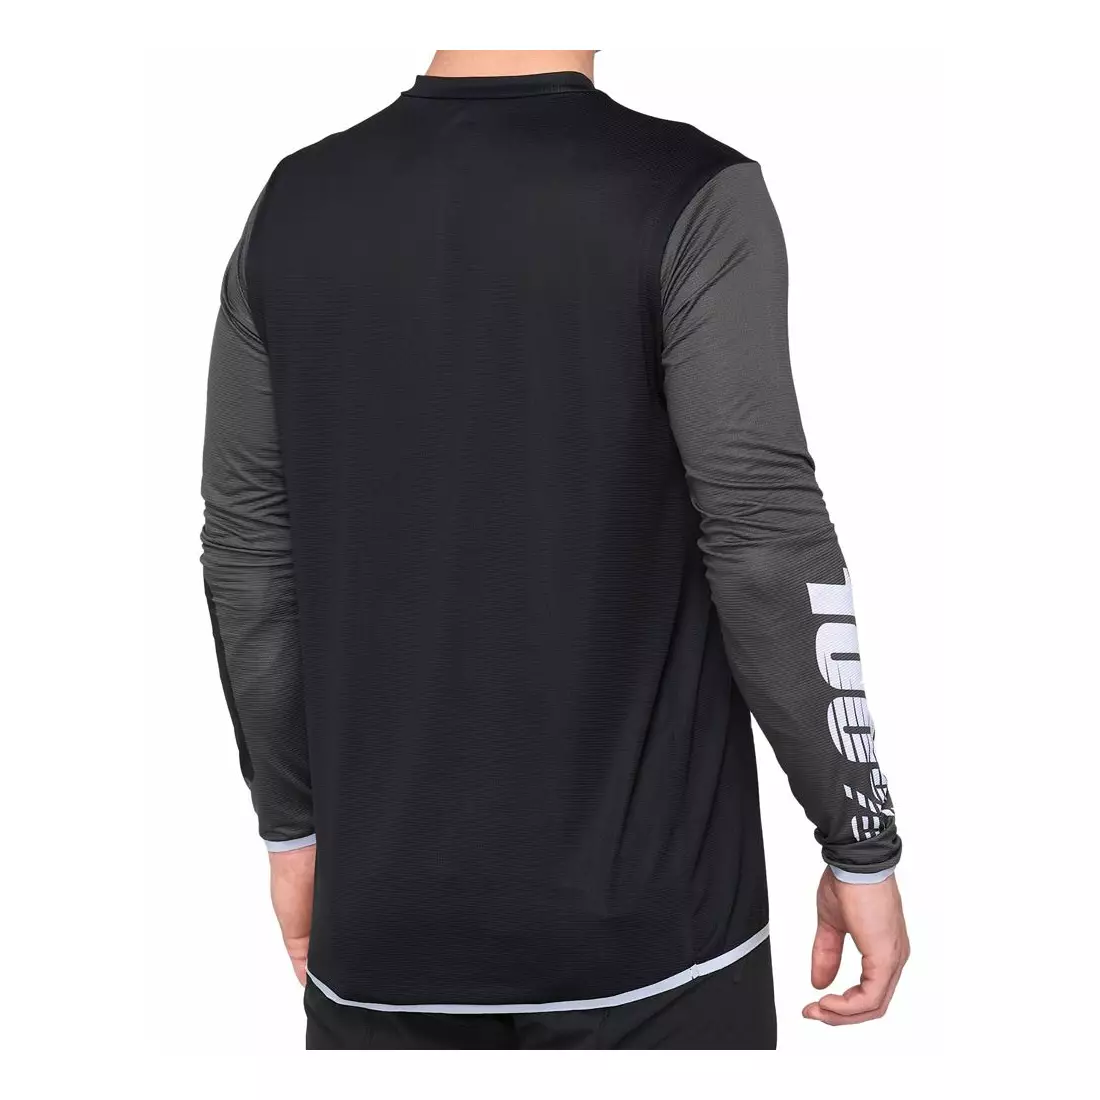 100% long sleeve men's shirt r-core x black white STO-41002-011-10